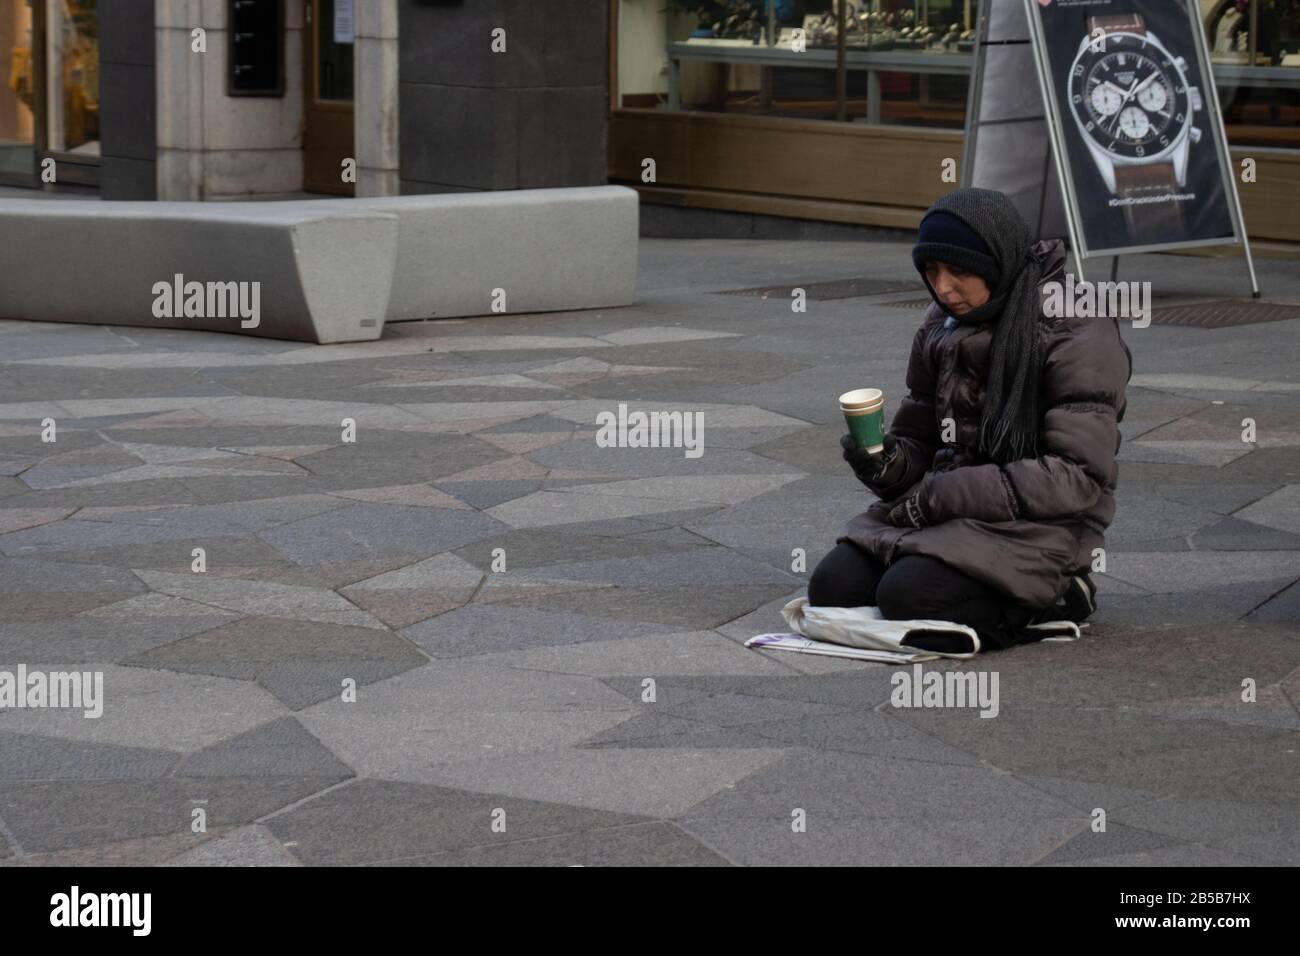 Helsinki, Finland - 3 March 2020: Poor person on street, Illustrative Editorial Stock Photo